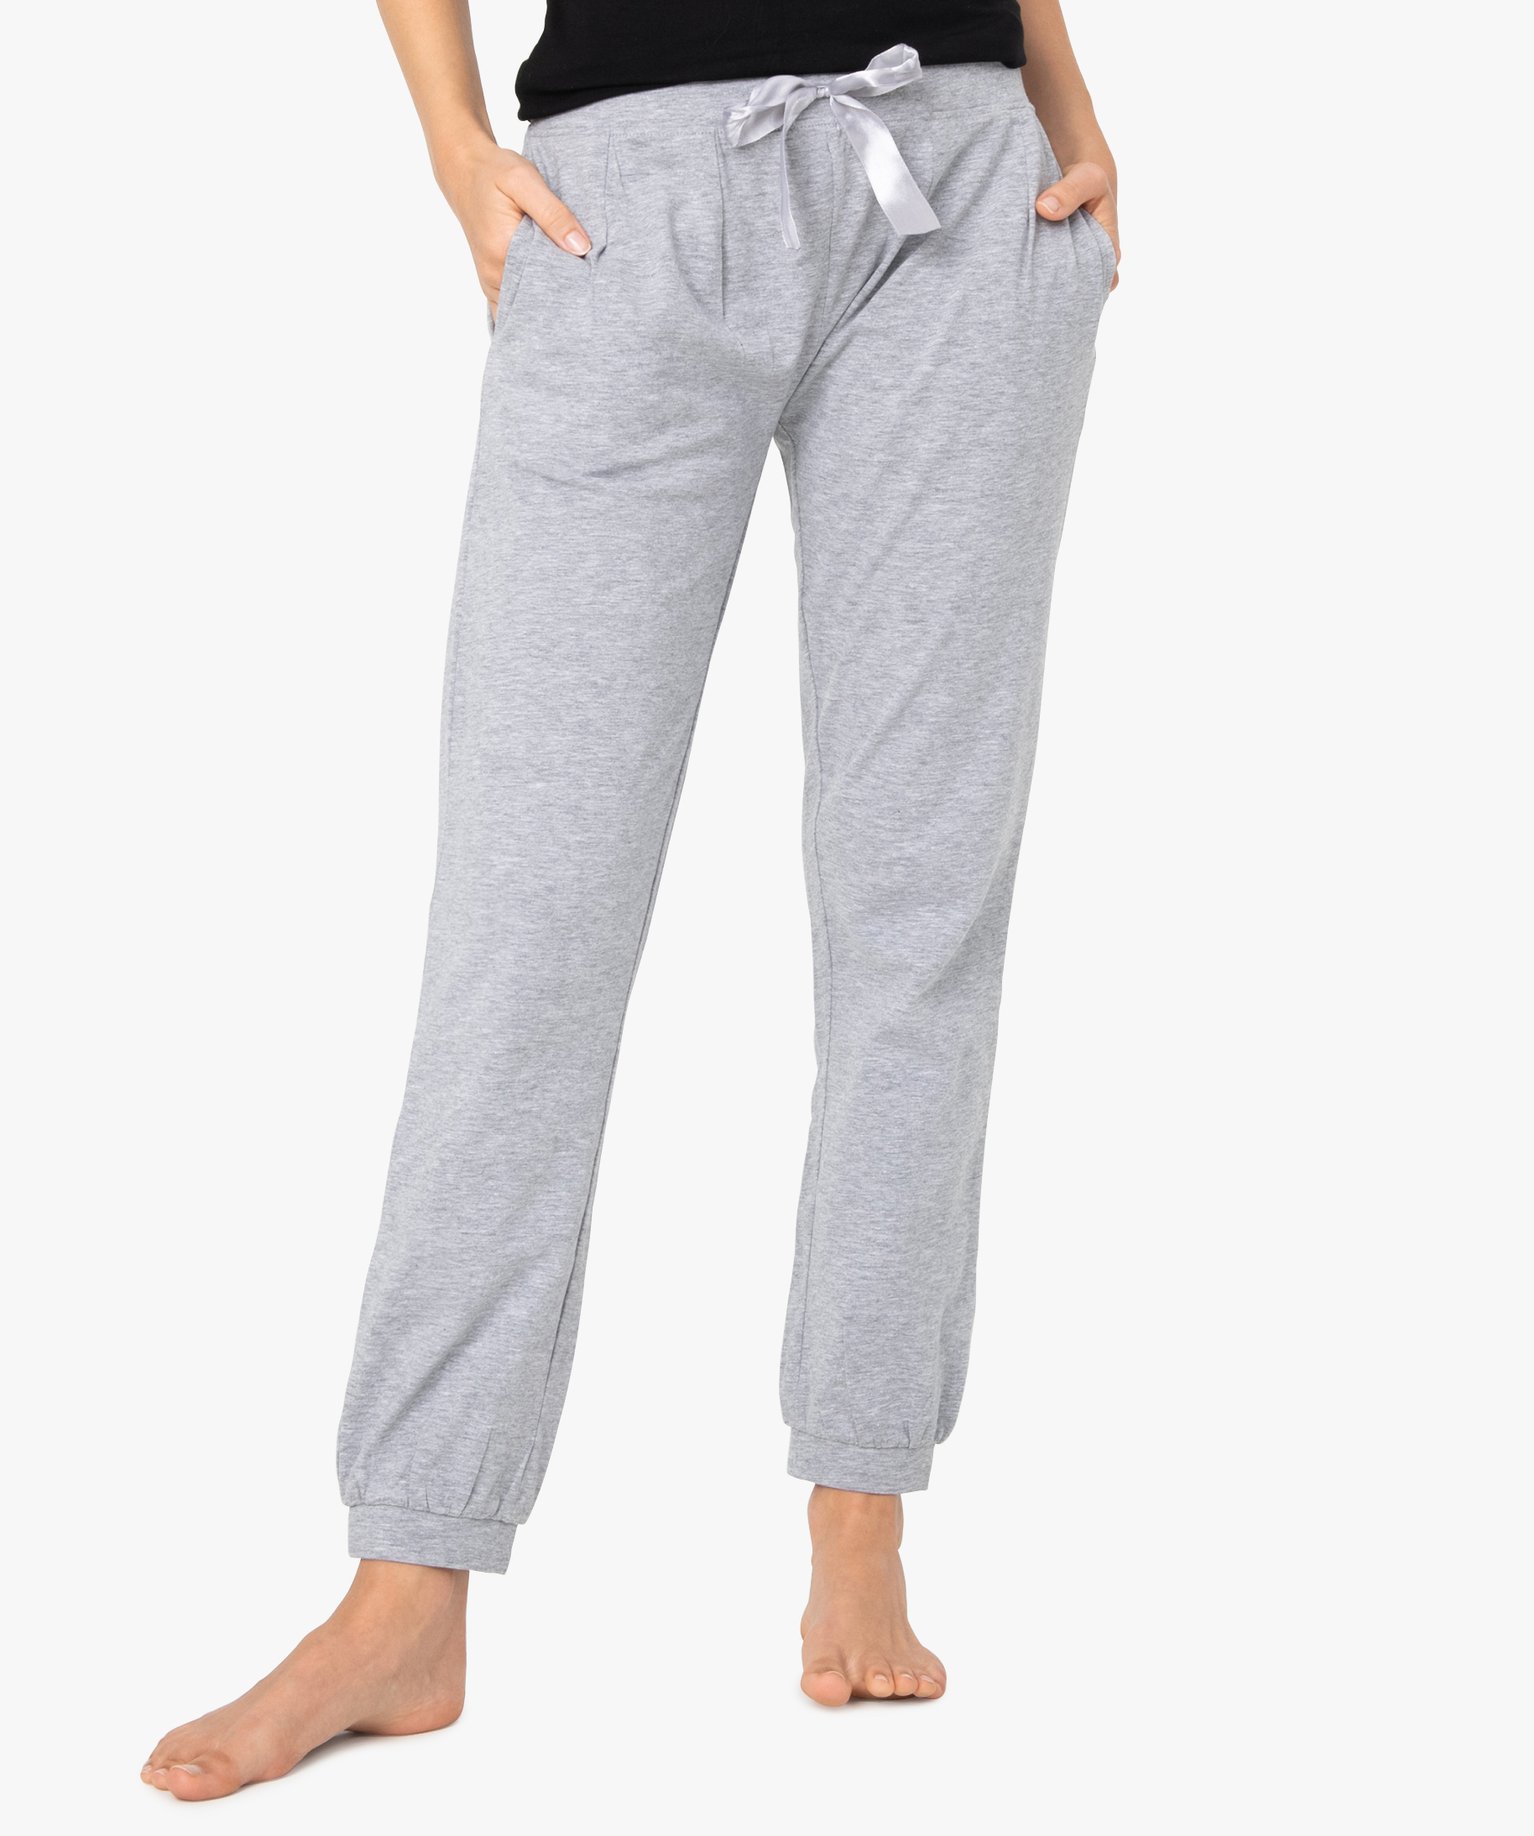 pantalon de pyjama femme avec bas resserrés